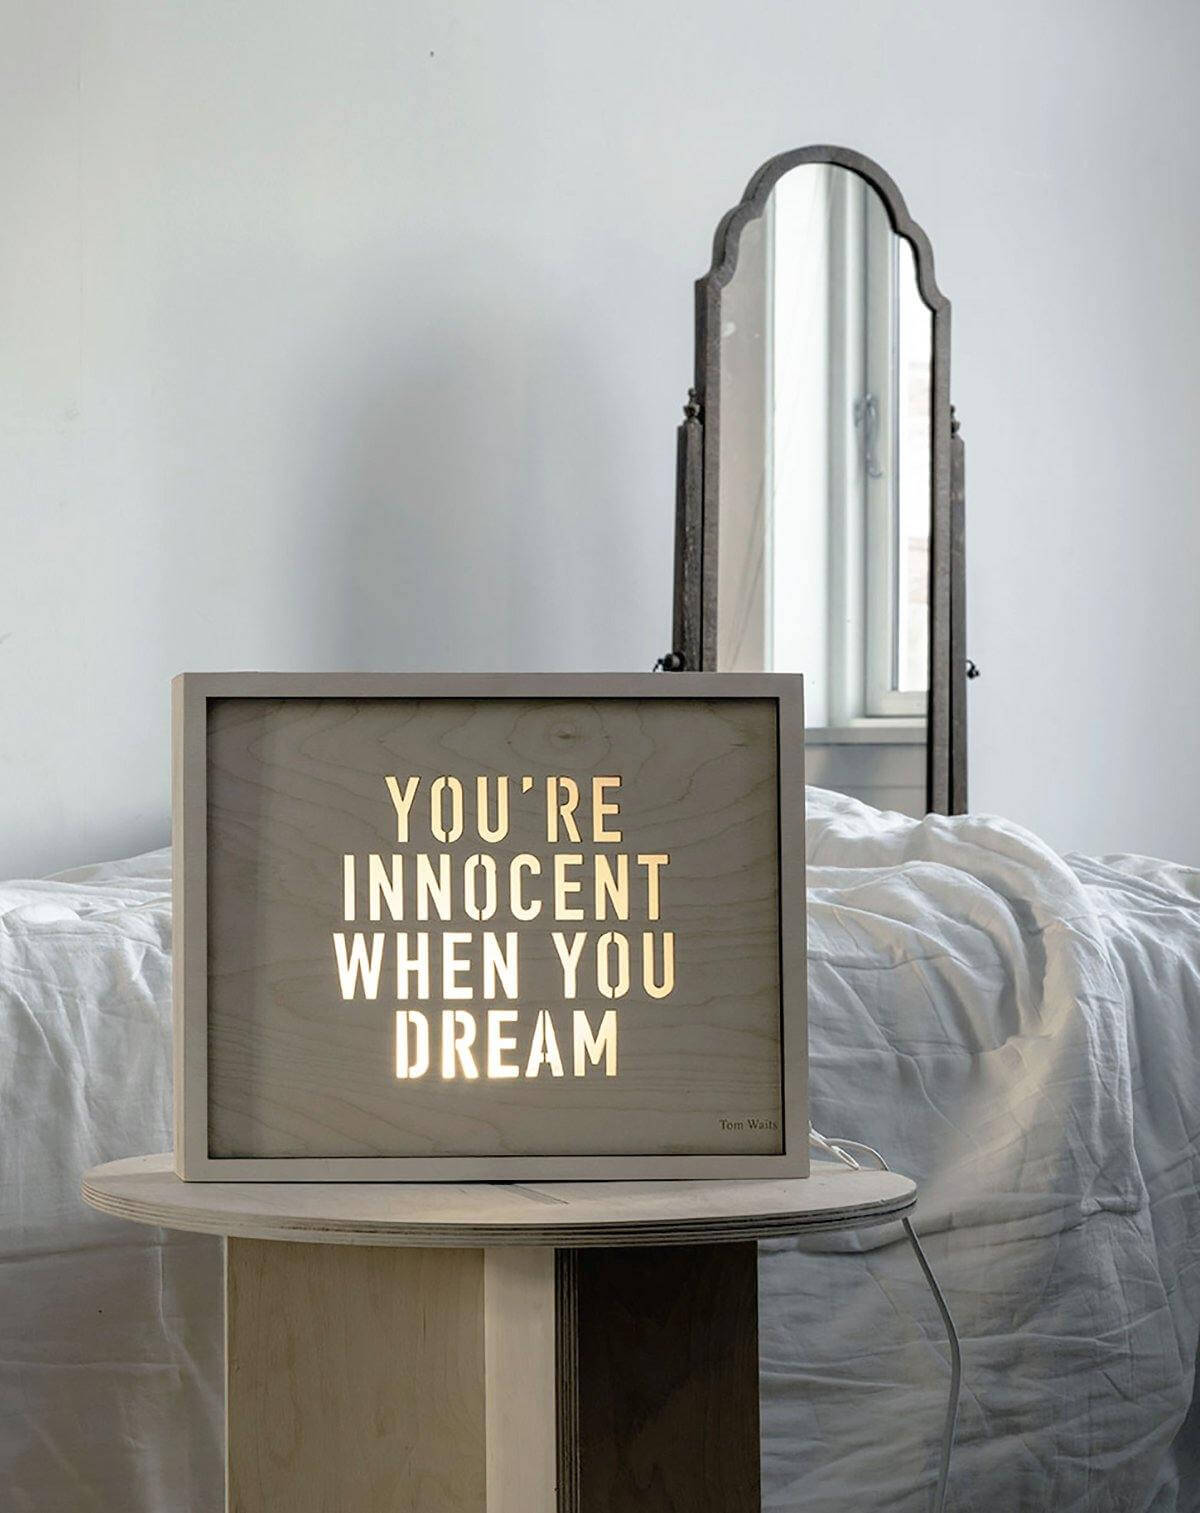 Lampe med citat af Tom Waits. "YOU ARE INNOCENT WHEN YOU DREAM"